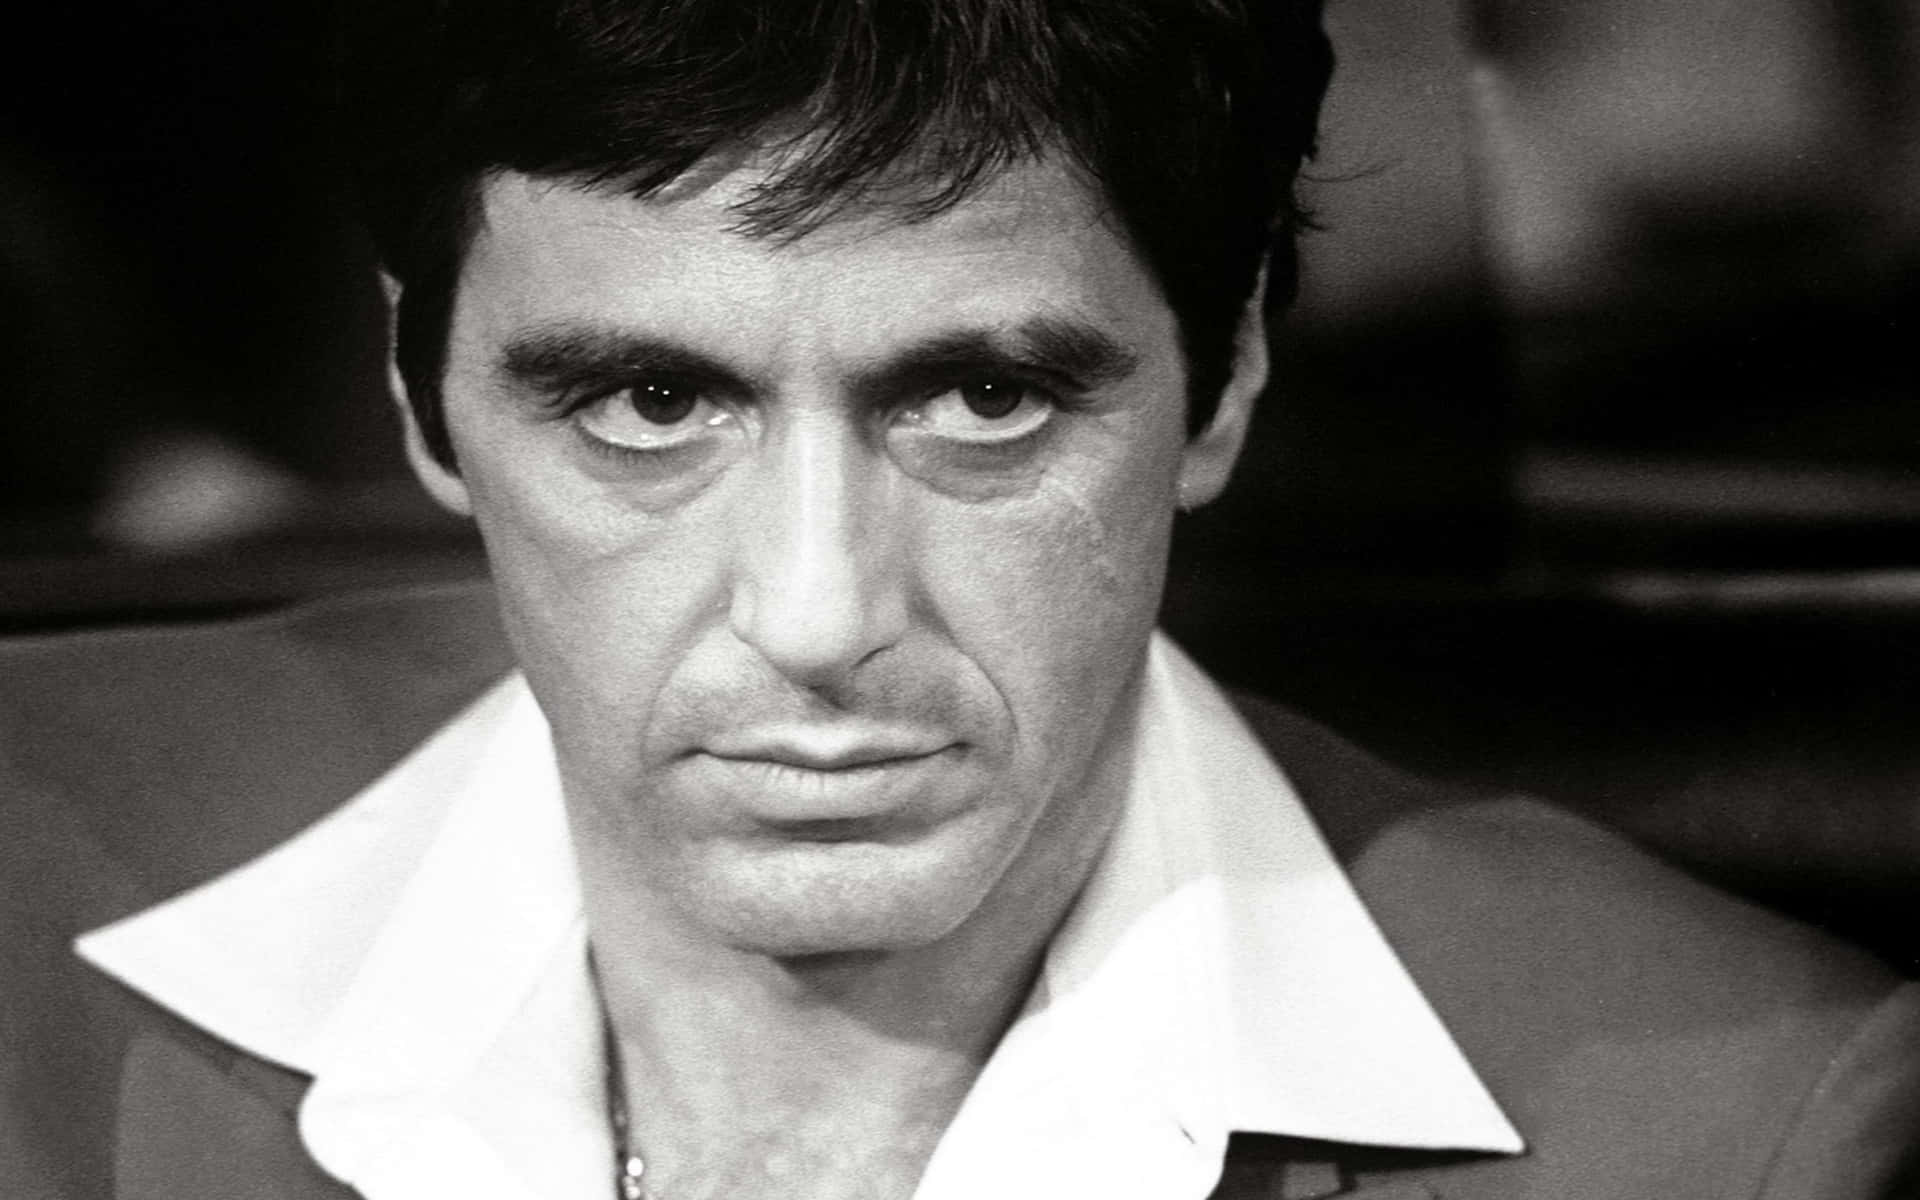 Akademiaward-vindende Skuespiller Al Pacino